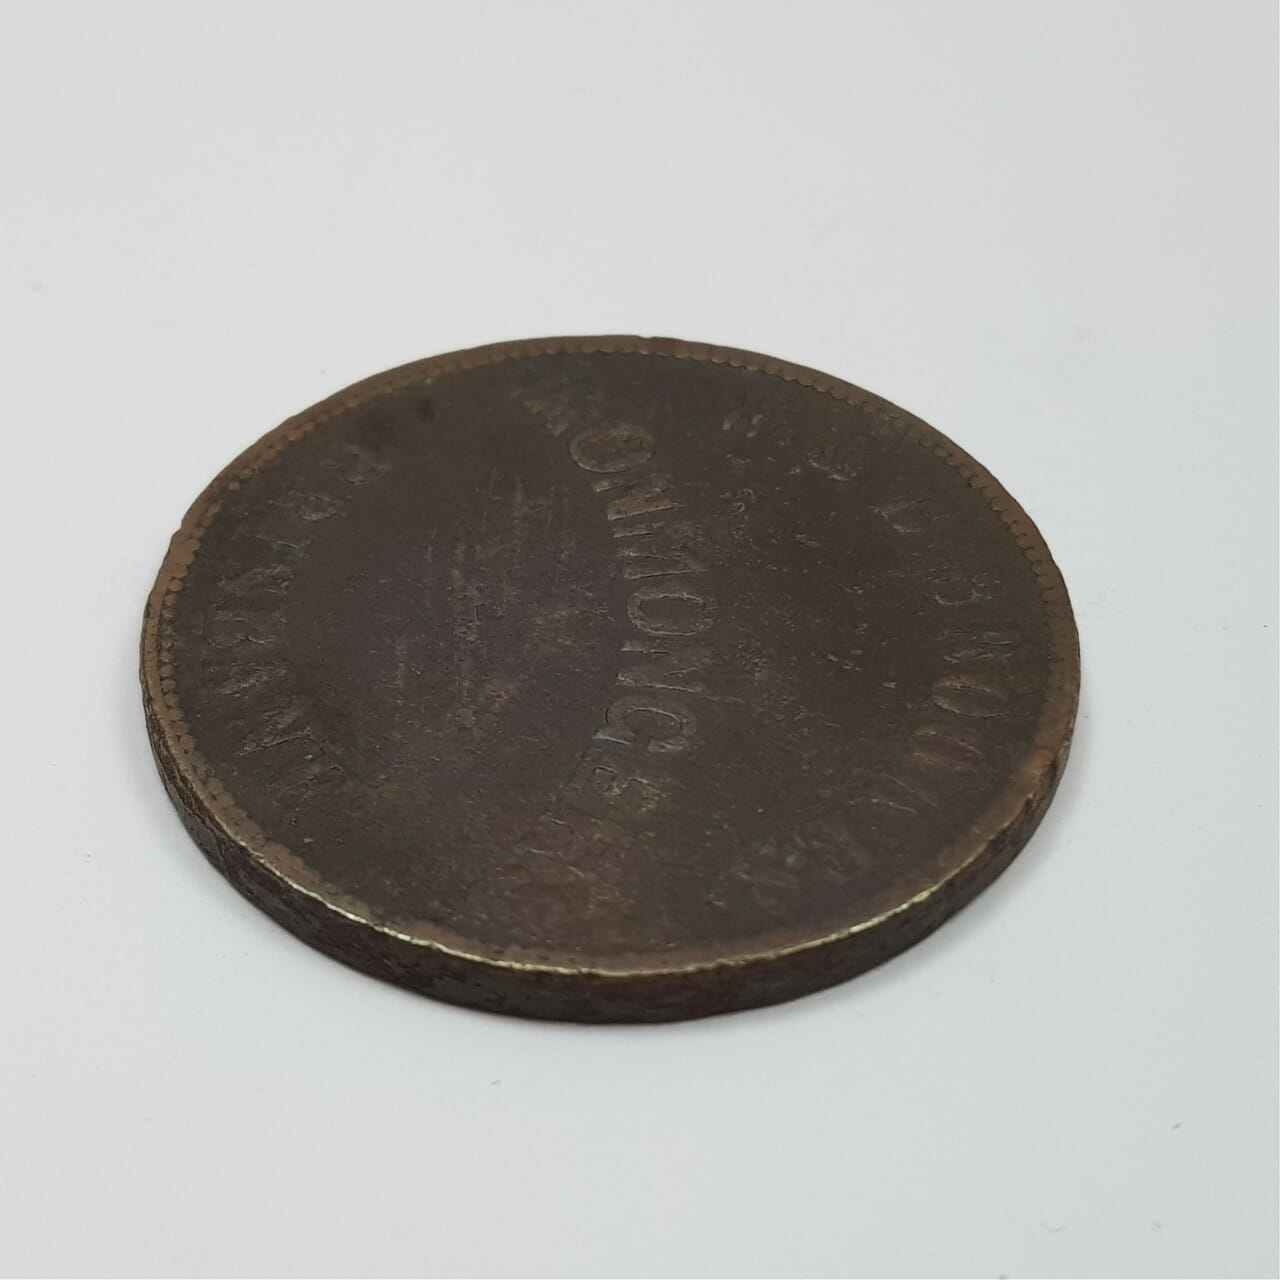 1863 W. & B. BROOKES IRONMONGERS BRISBANE PENNY COIN / TOKEN #8392-1